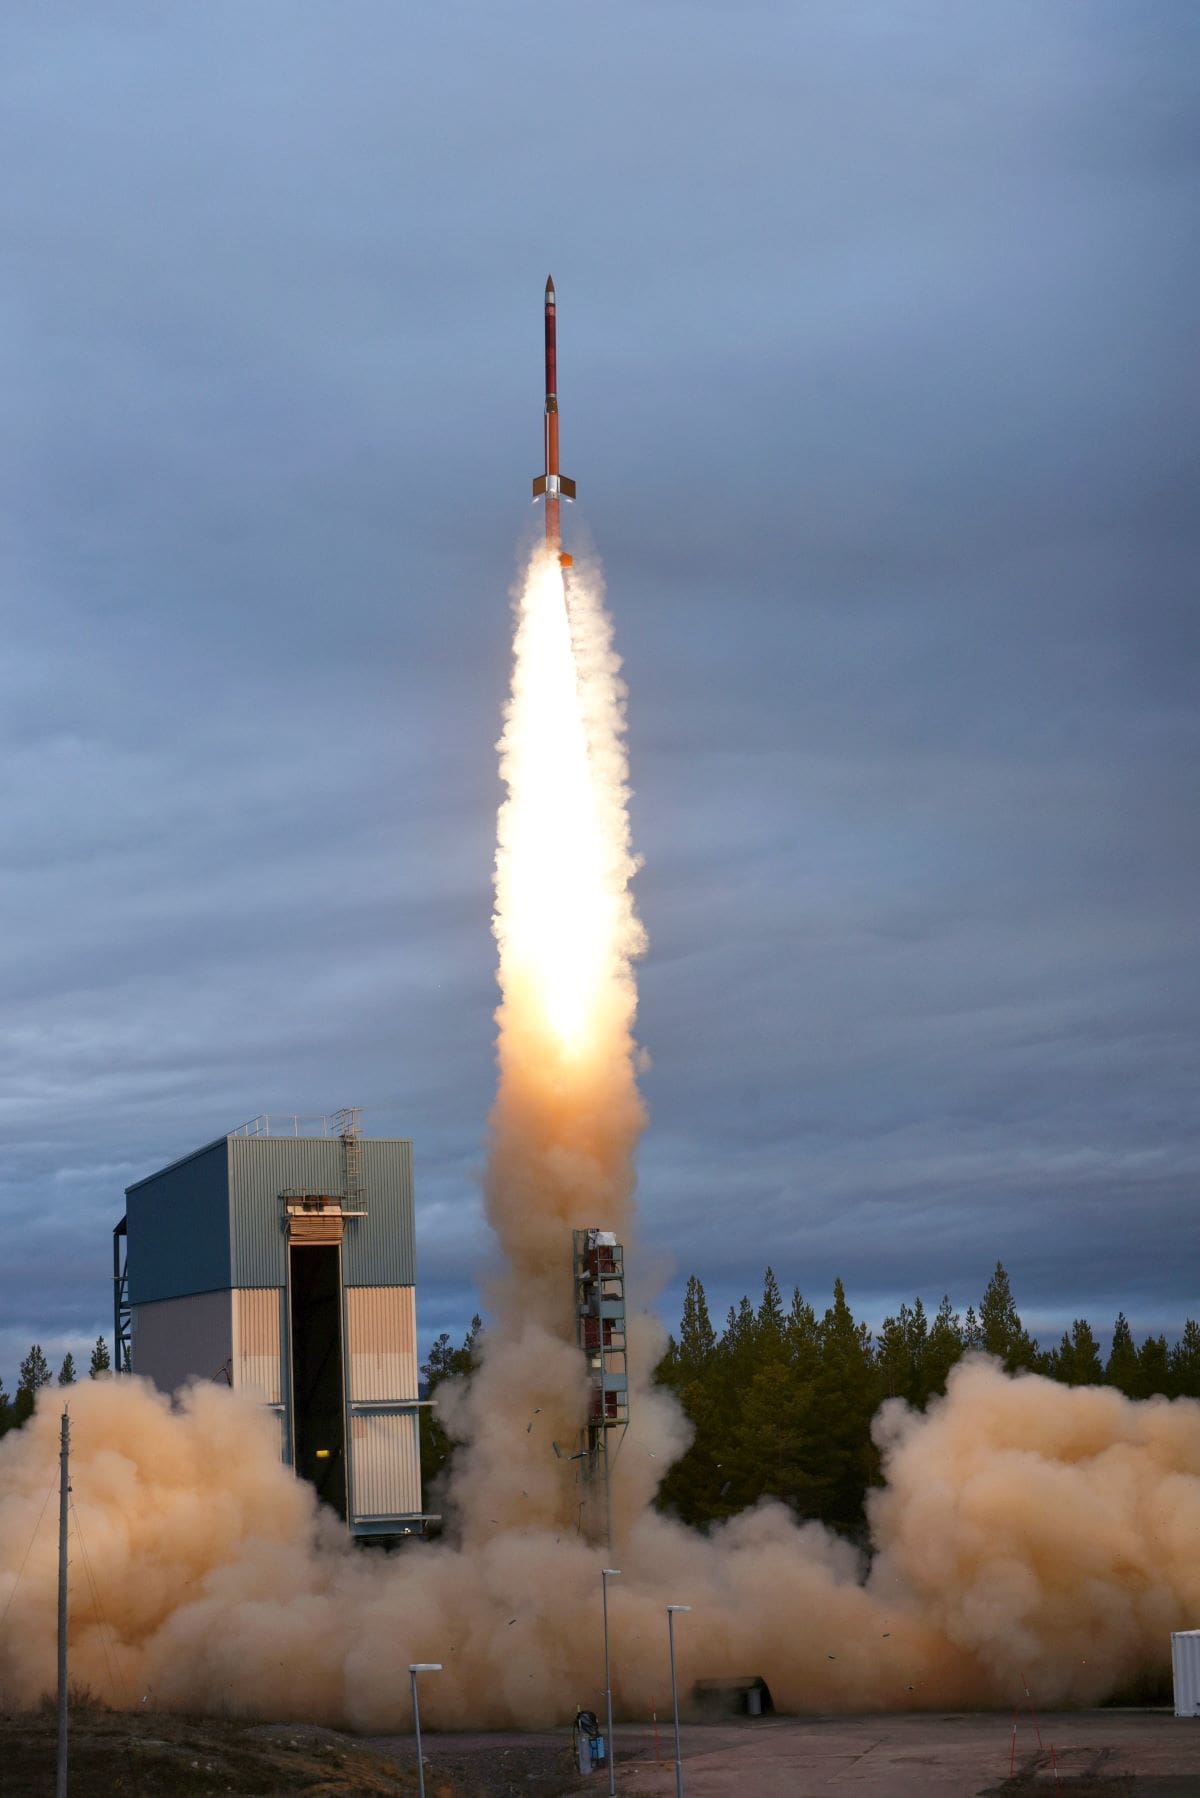 A beautiful launch of a beautiful rocket